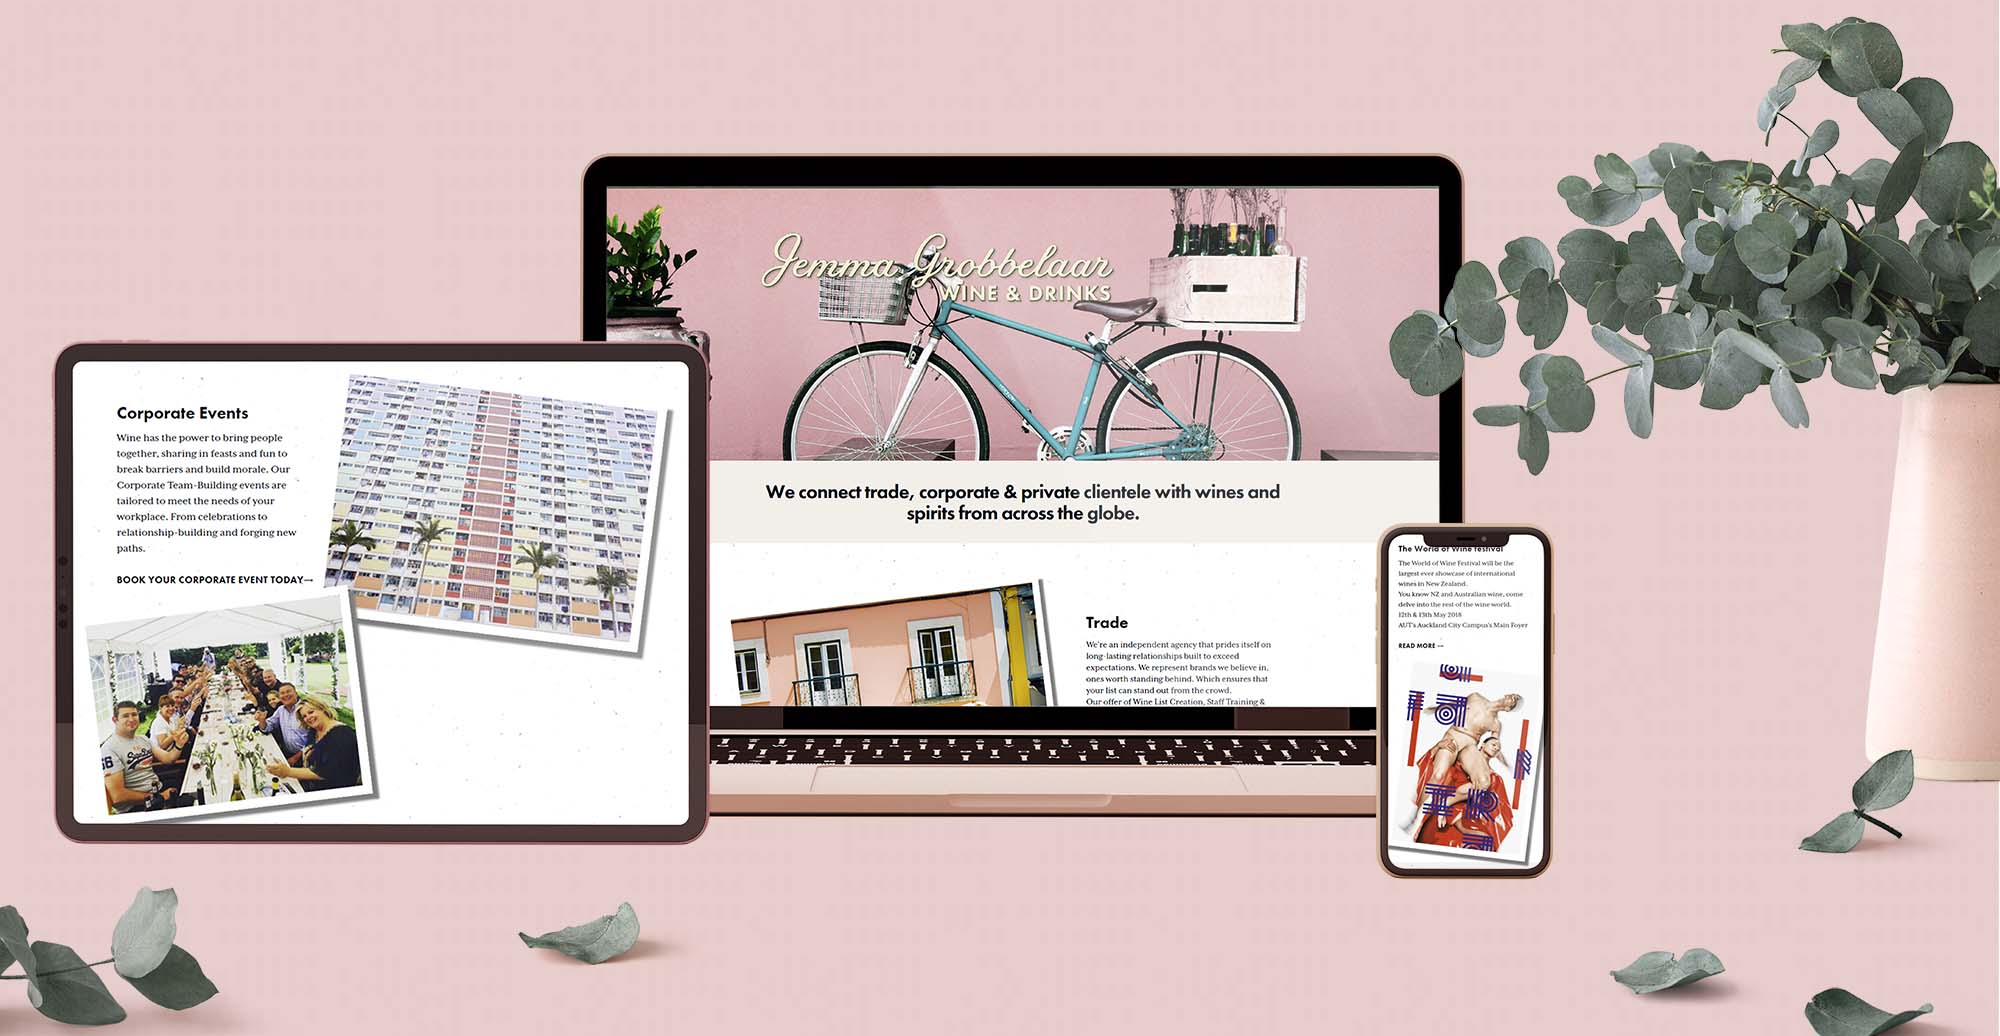 A mockup of the Jemma Grobbelaar Wine & Drinks website on 3 devices to demonstrate responsiveness.